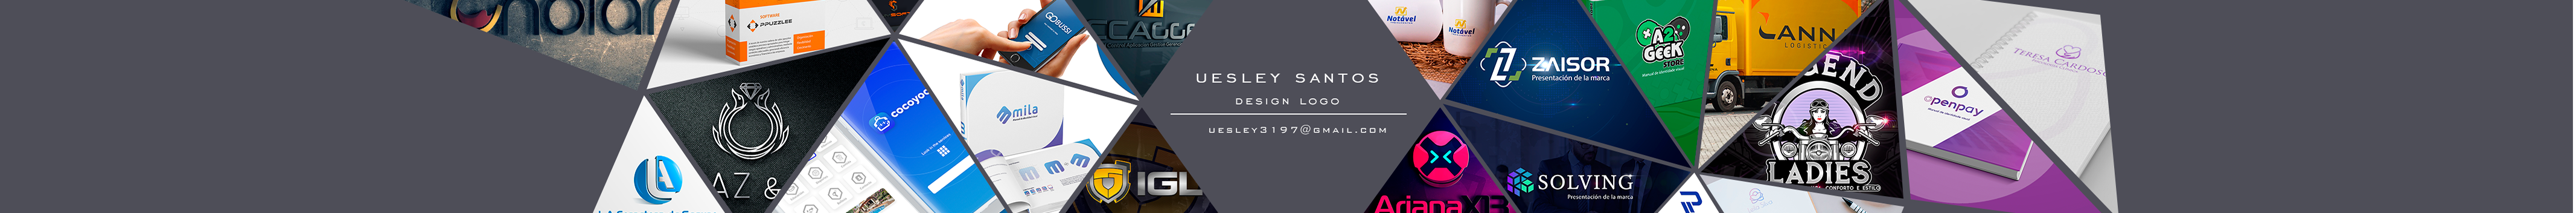 Uesley Melo dos Santoss profilbanner